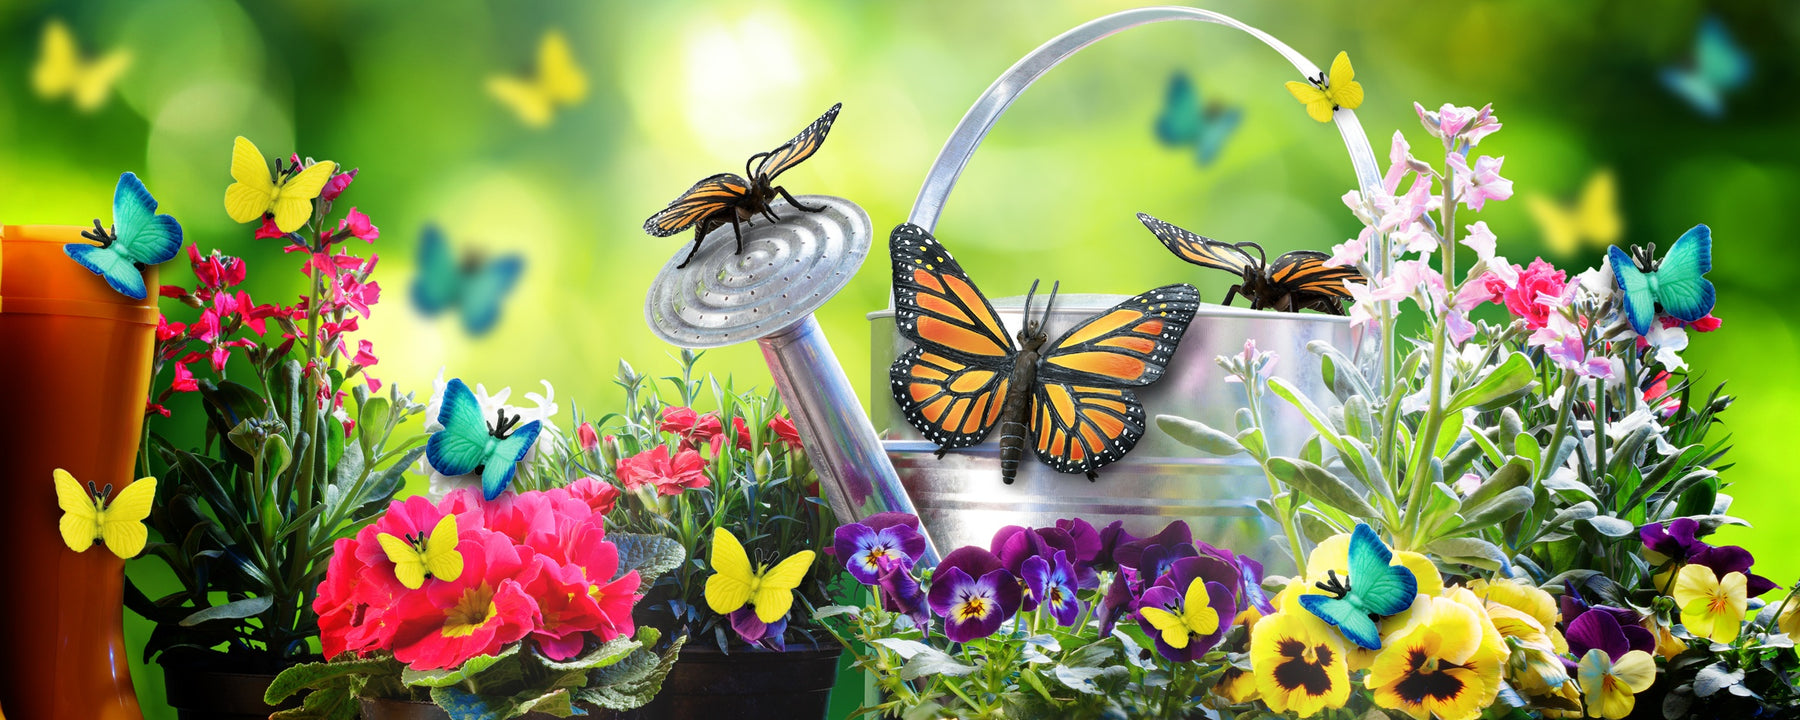 Learn About Butterflies for Learn About Butterflies Day! - Safari Ltd®